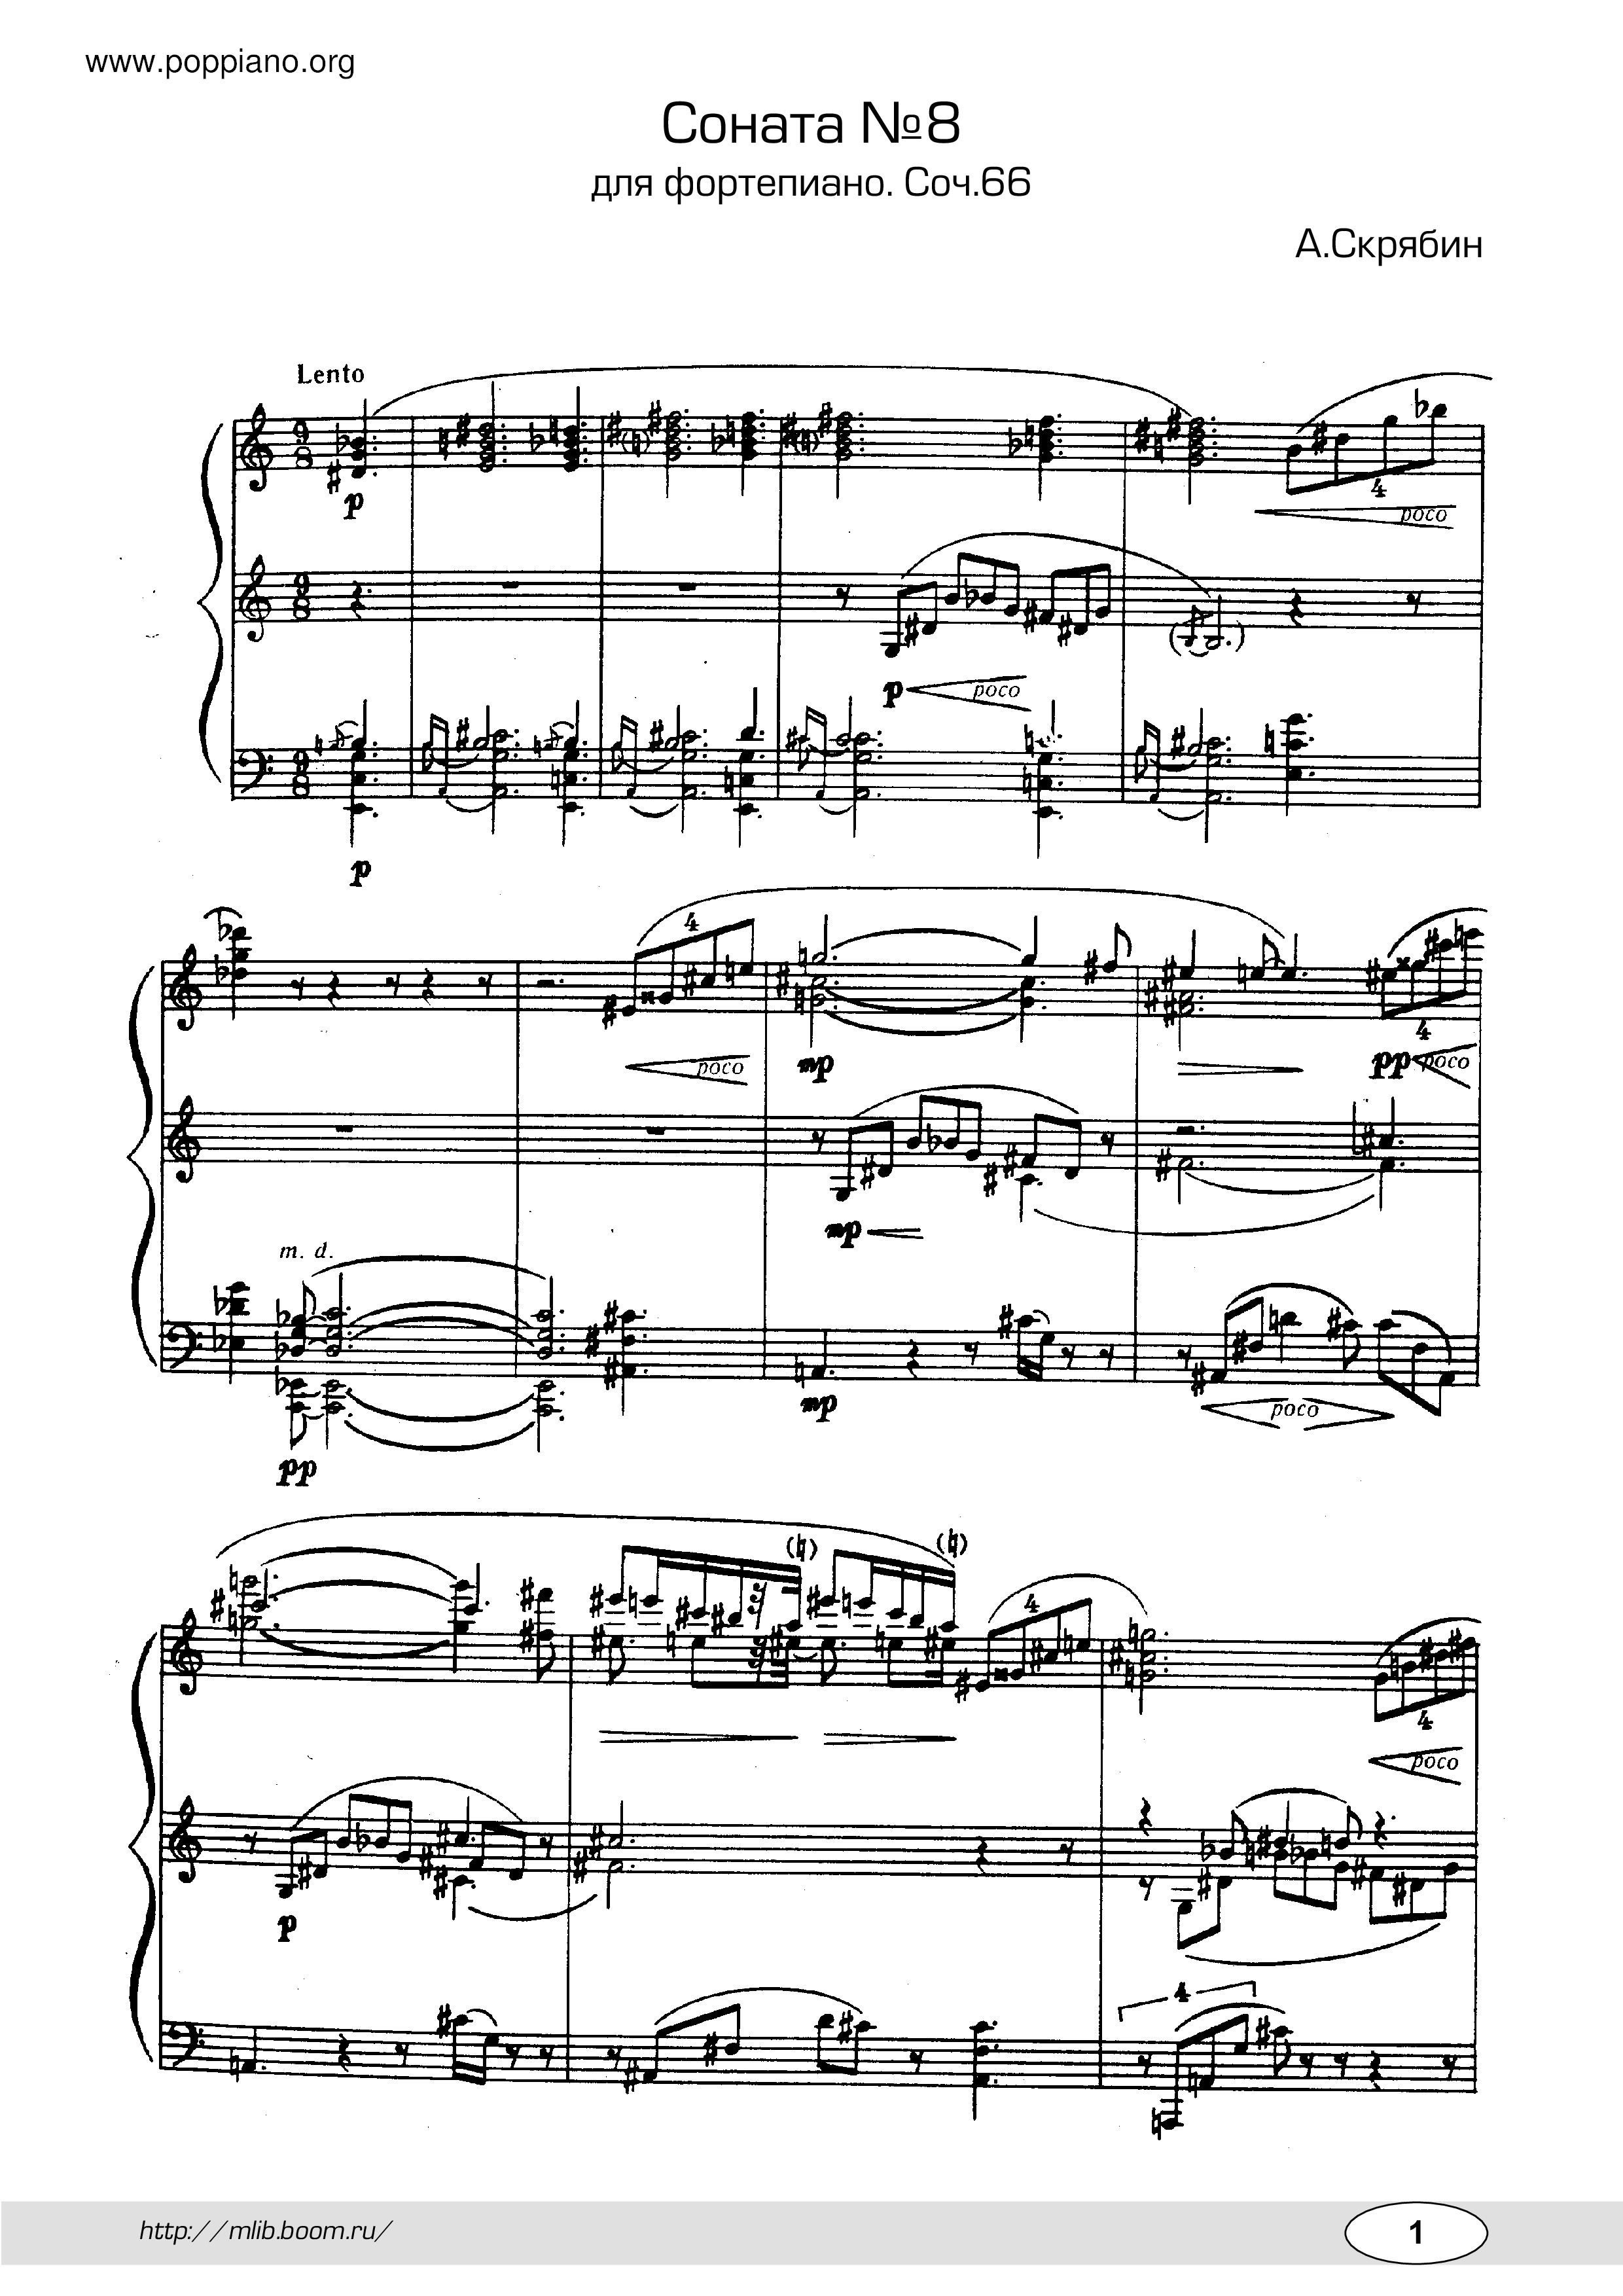 Piano Sonata No.8, Op.66琴谱